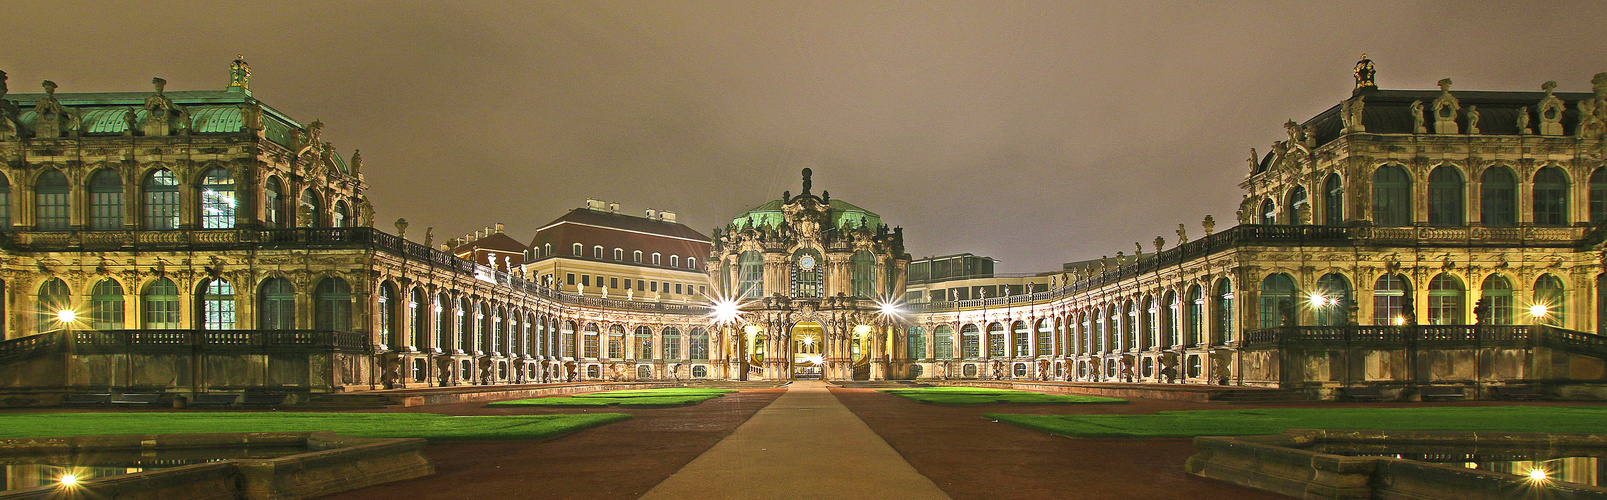 Glockenspielpavillon, Zwinger, Dresden